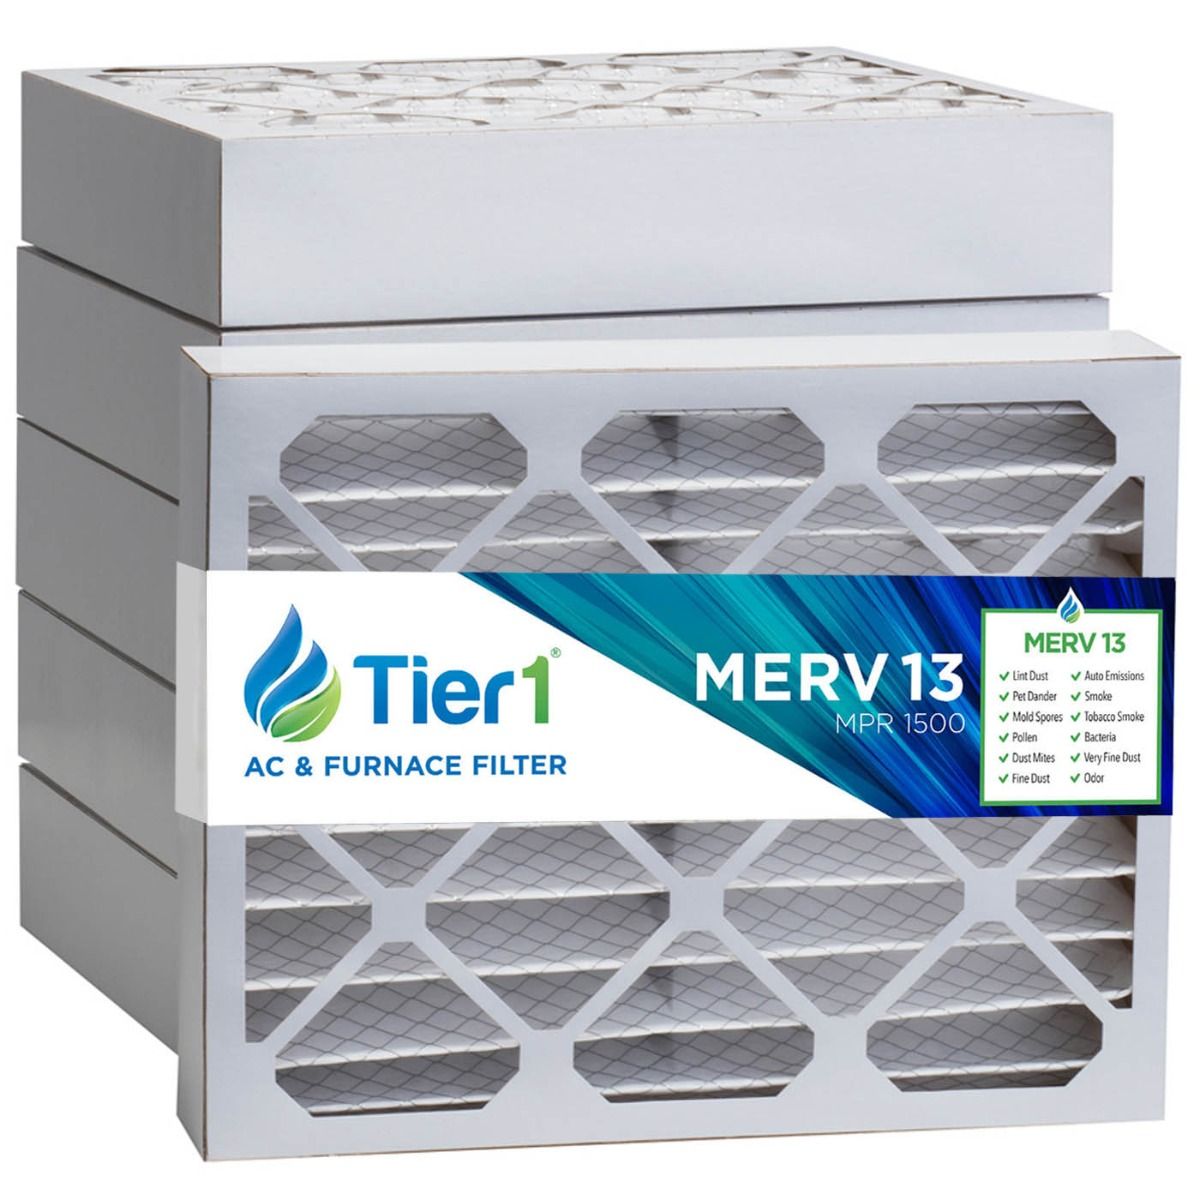 20x25x4 Merv 13 Universal Air Filter By Tier1 (Single Filter)